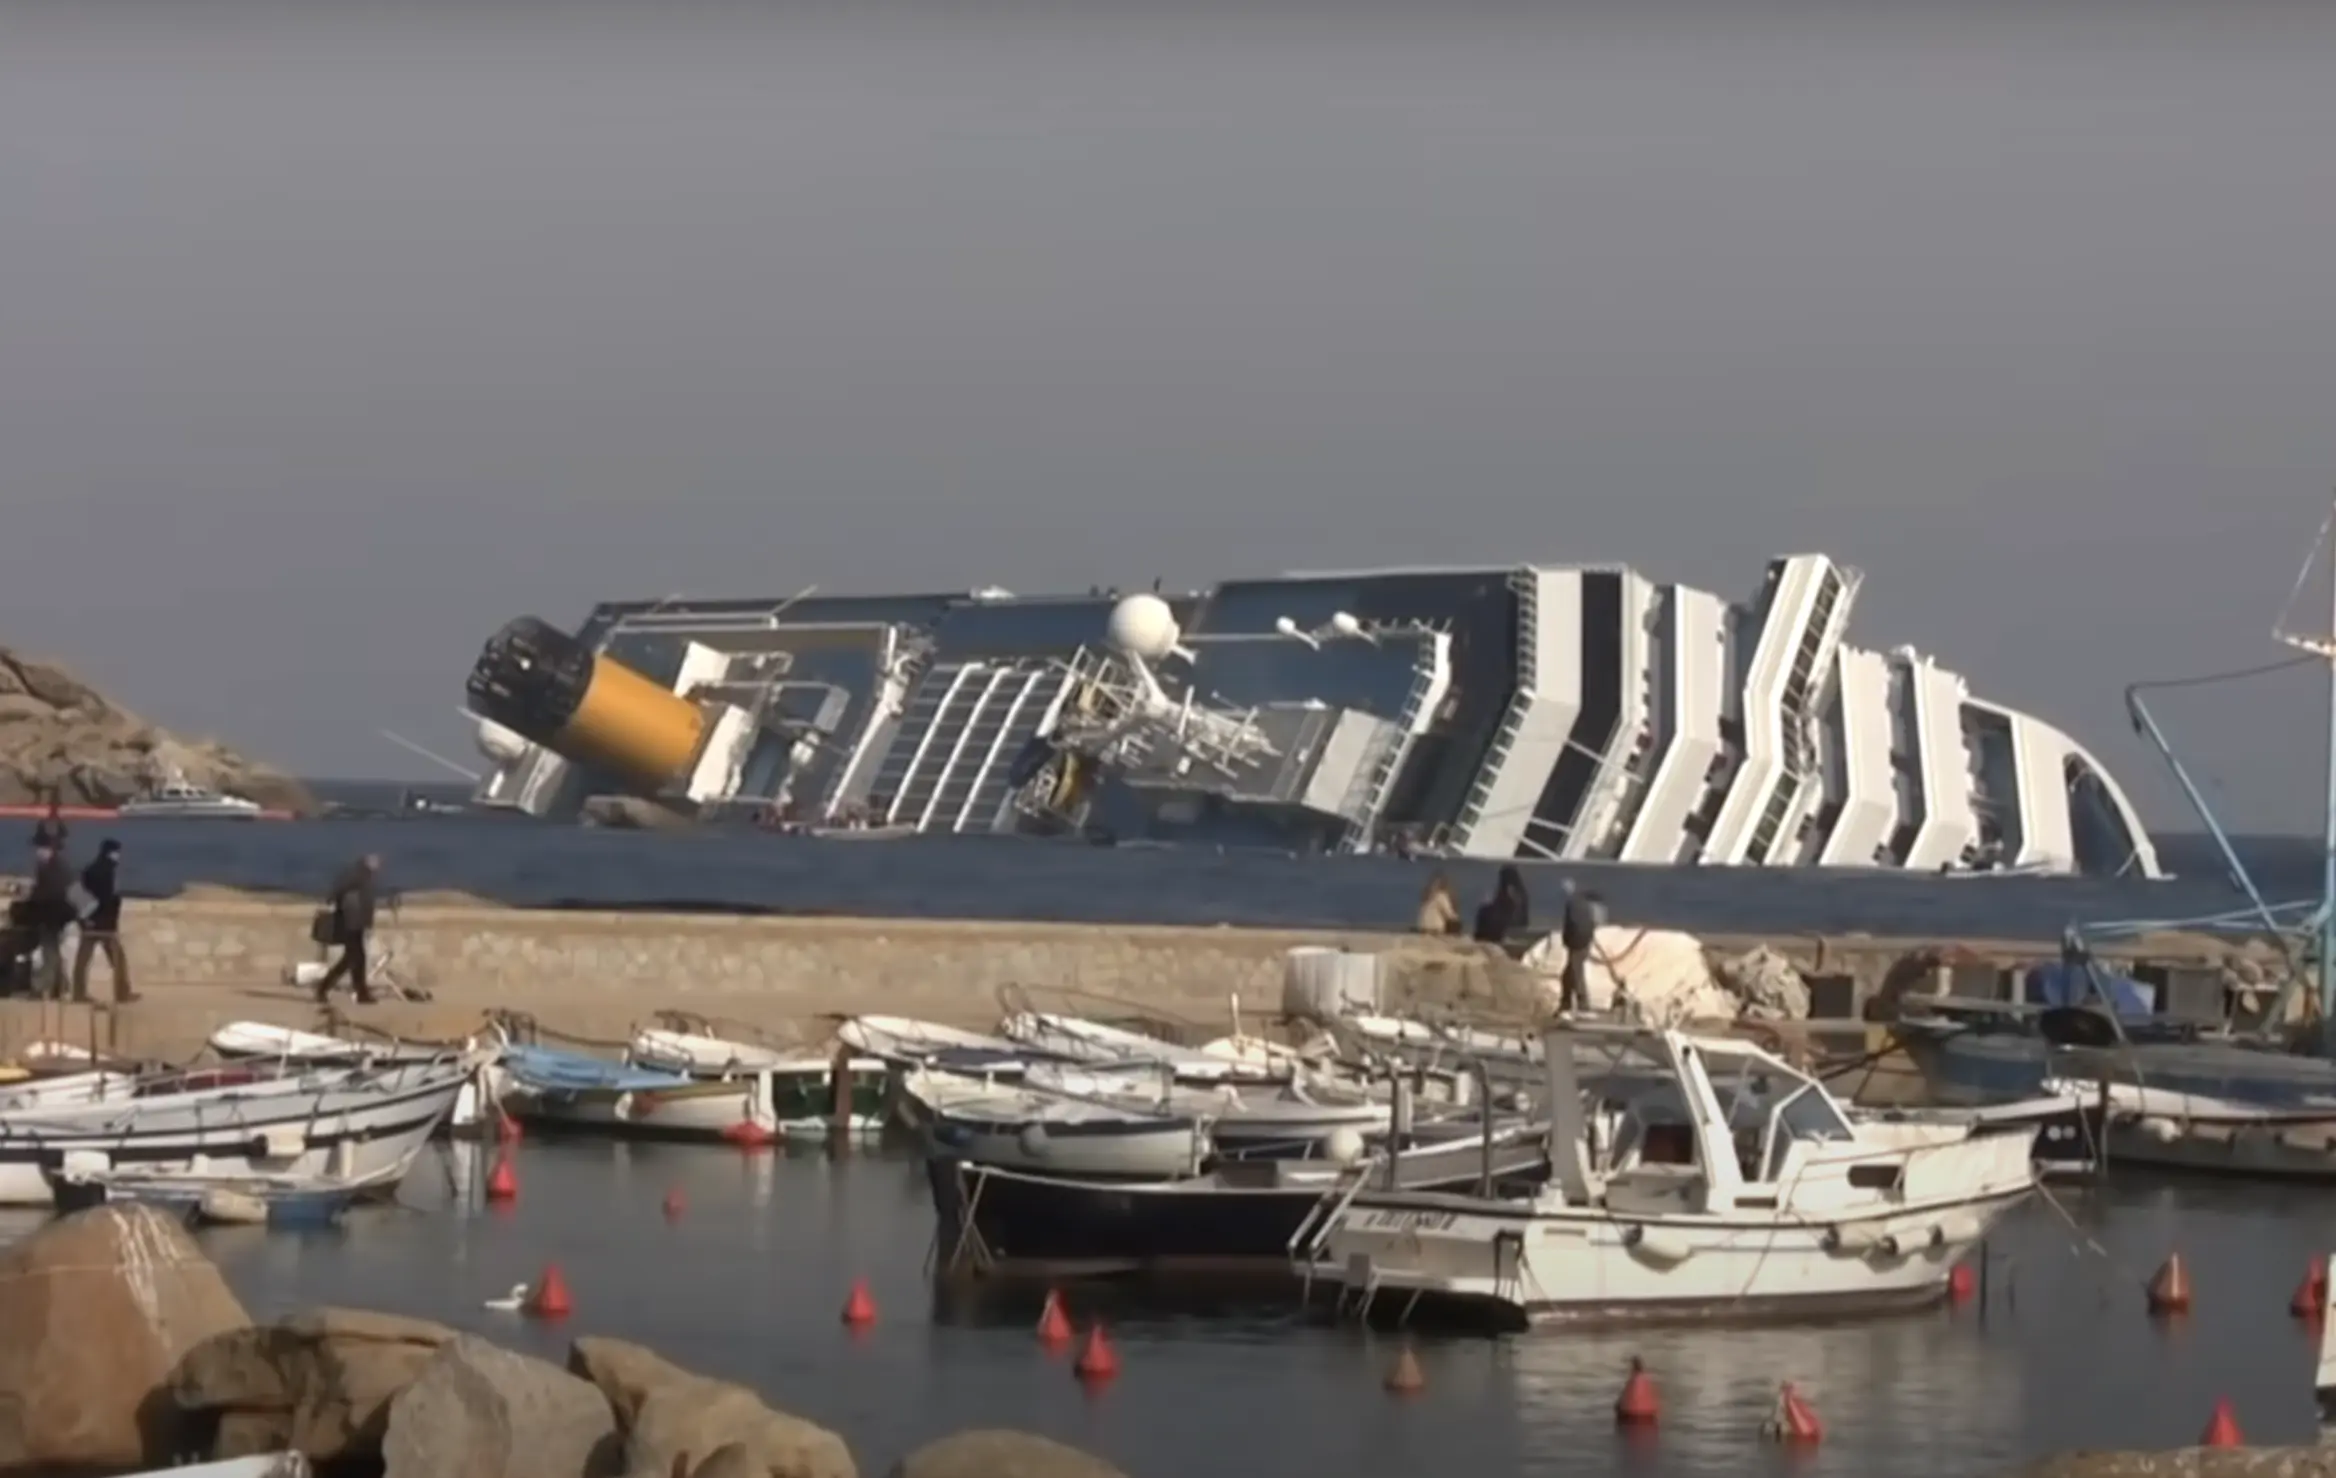 why cruise ship sinks